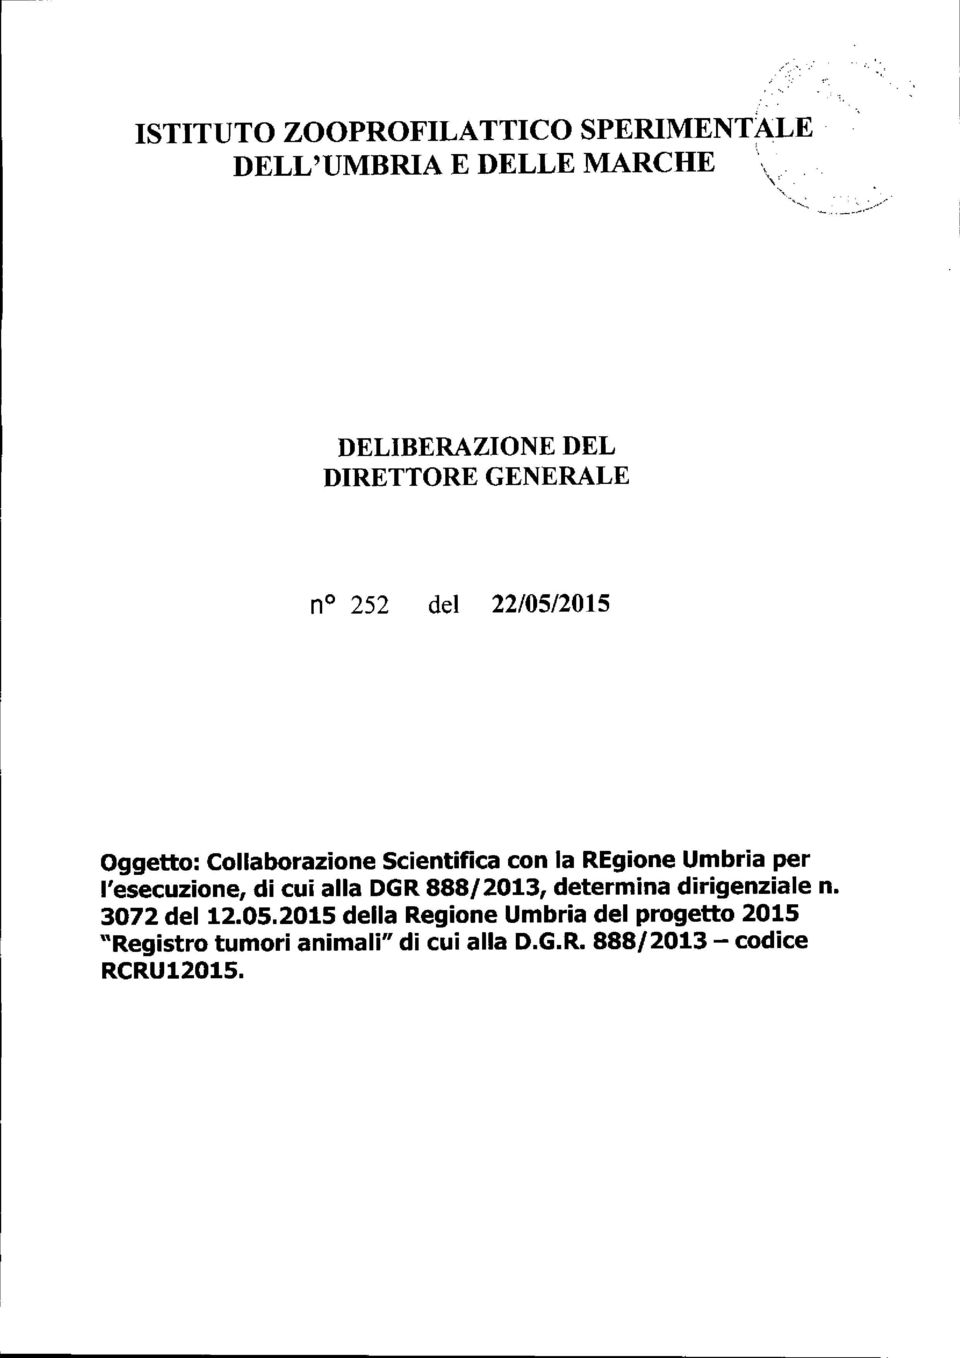 la REgione Umbria per l'esecuzione, di cui alla DGR 888/2013, determina dirigenziale n. 3072 del 12.